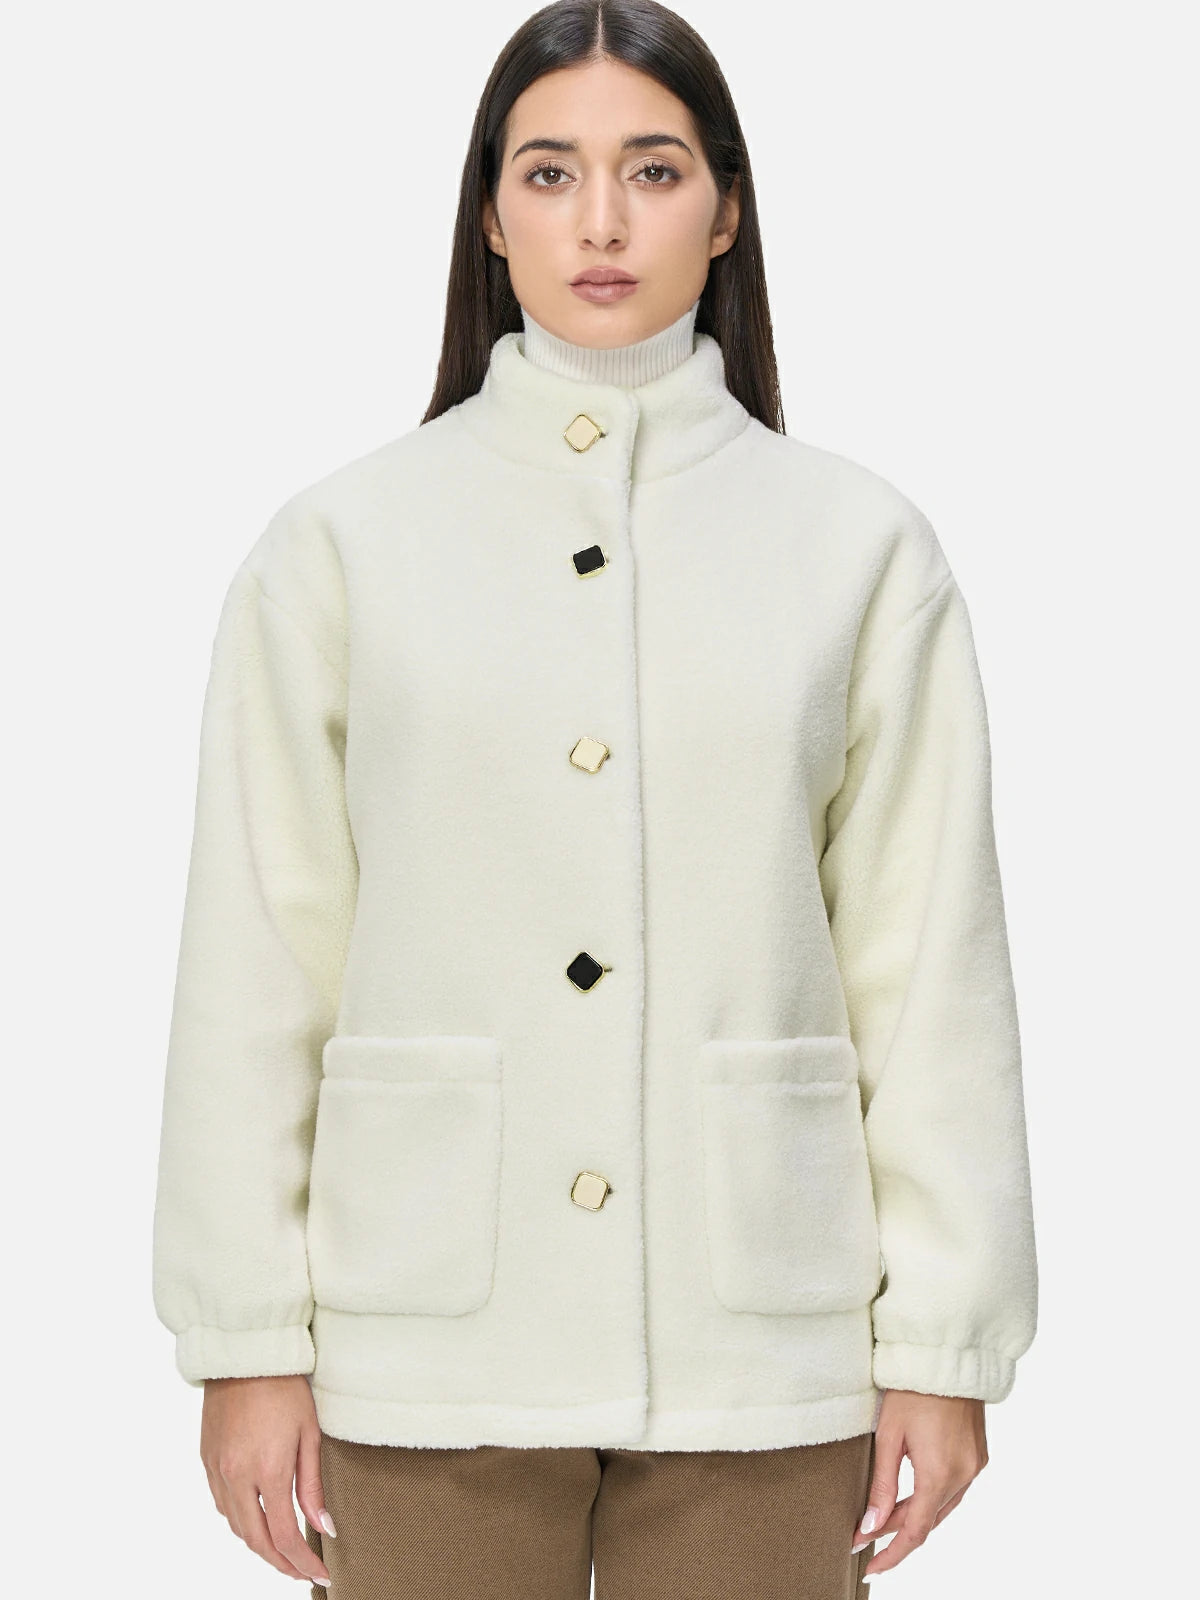 Elegant Beige Fleece Jacket with Stand-up Collar for Versatile Style